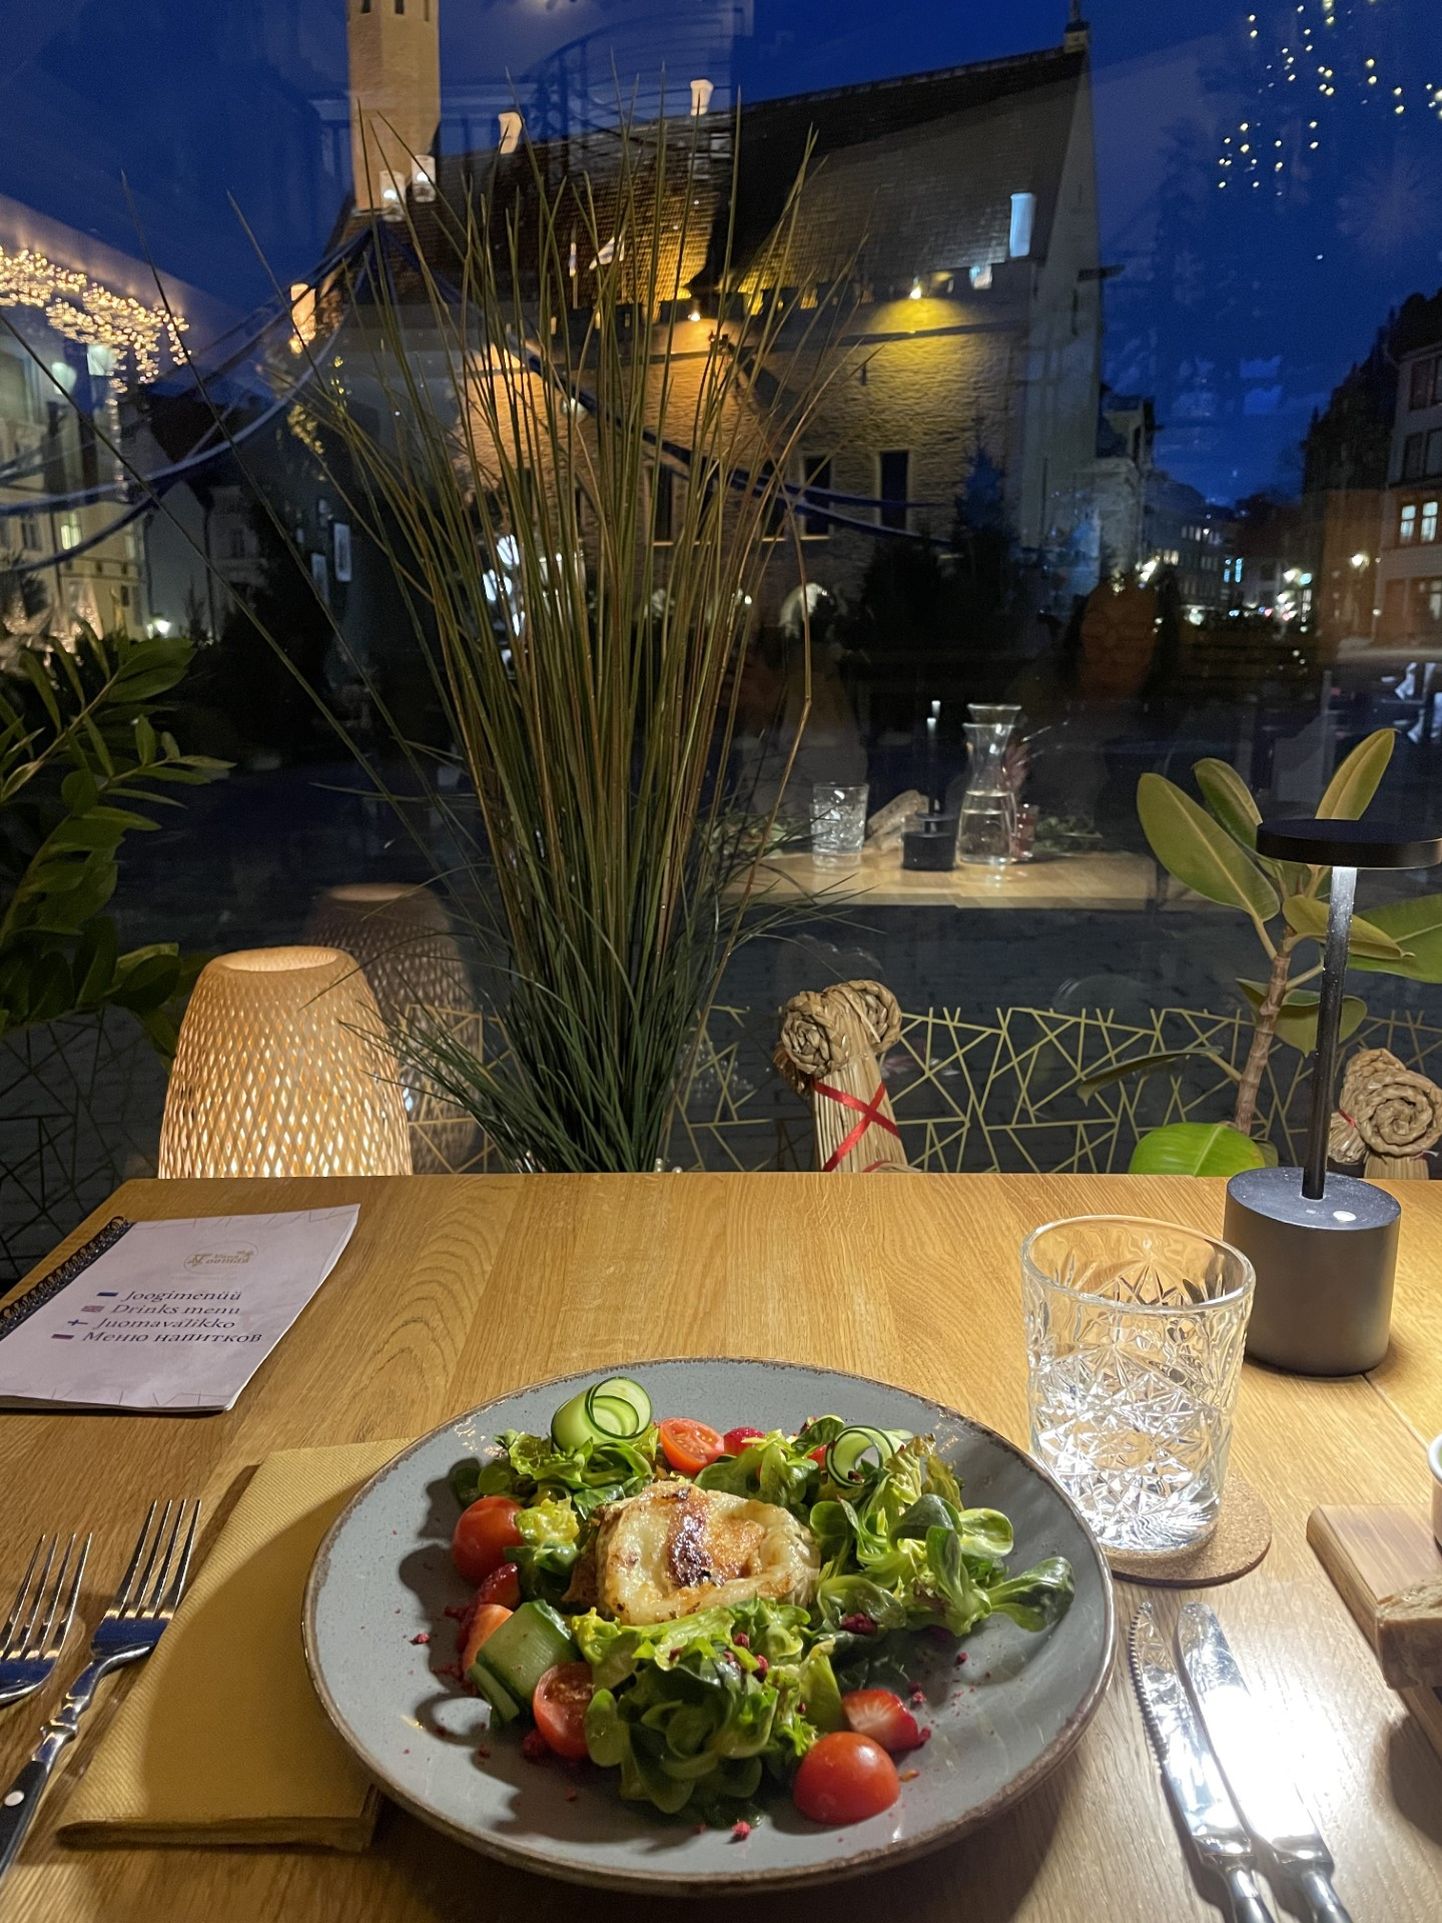 Ужин в ресторане в Таллинне.